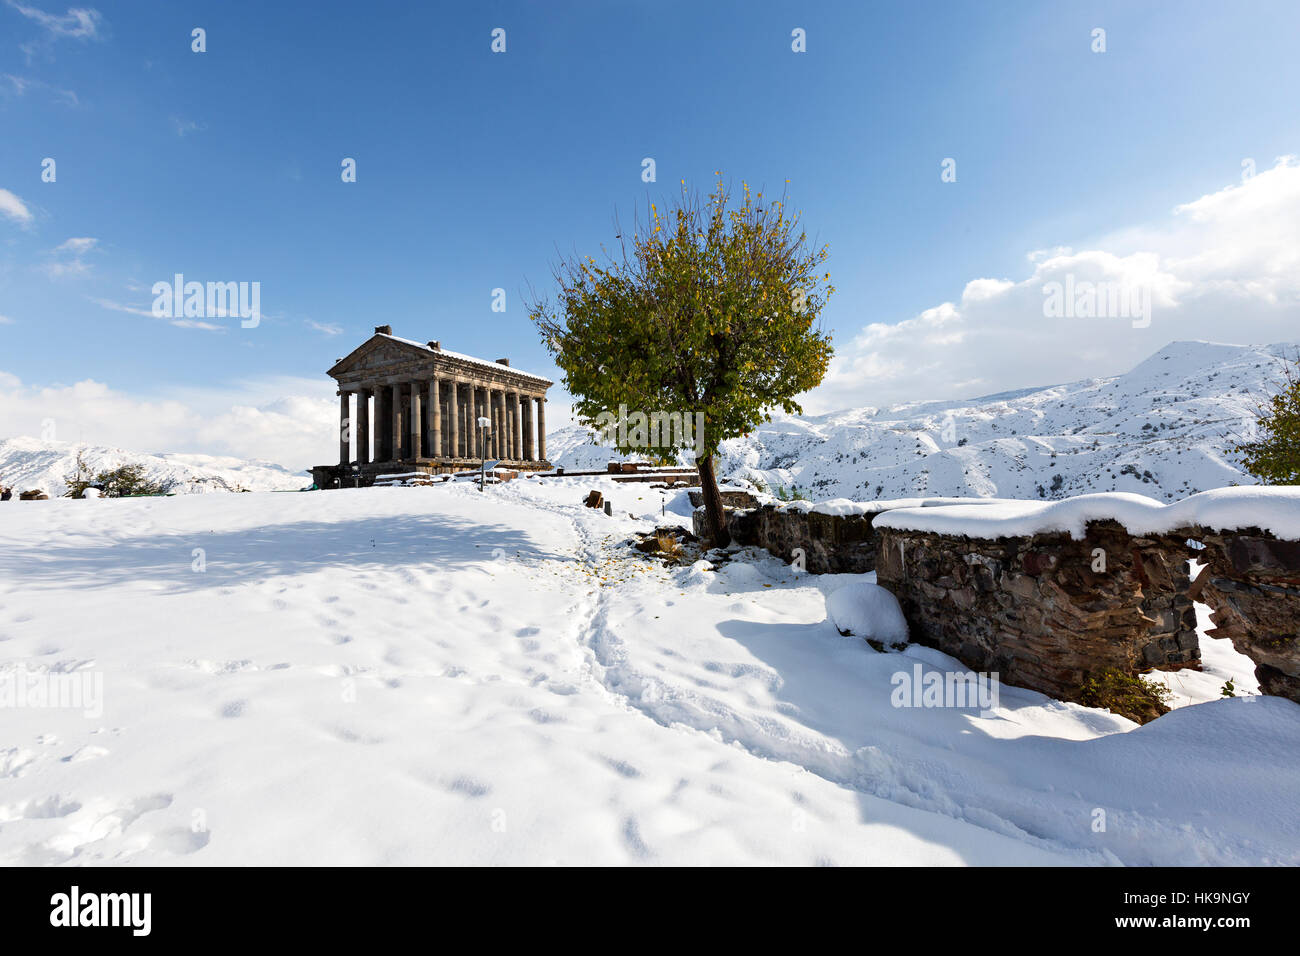 Hellenistic temple of Garni in the winter, in Armenia Stock Photo